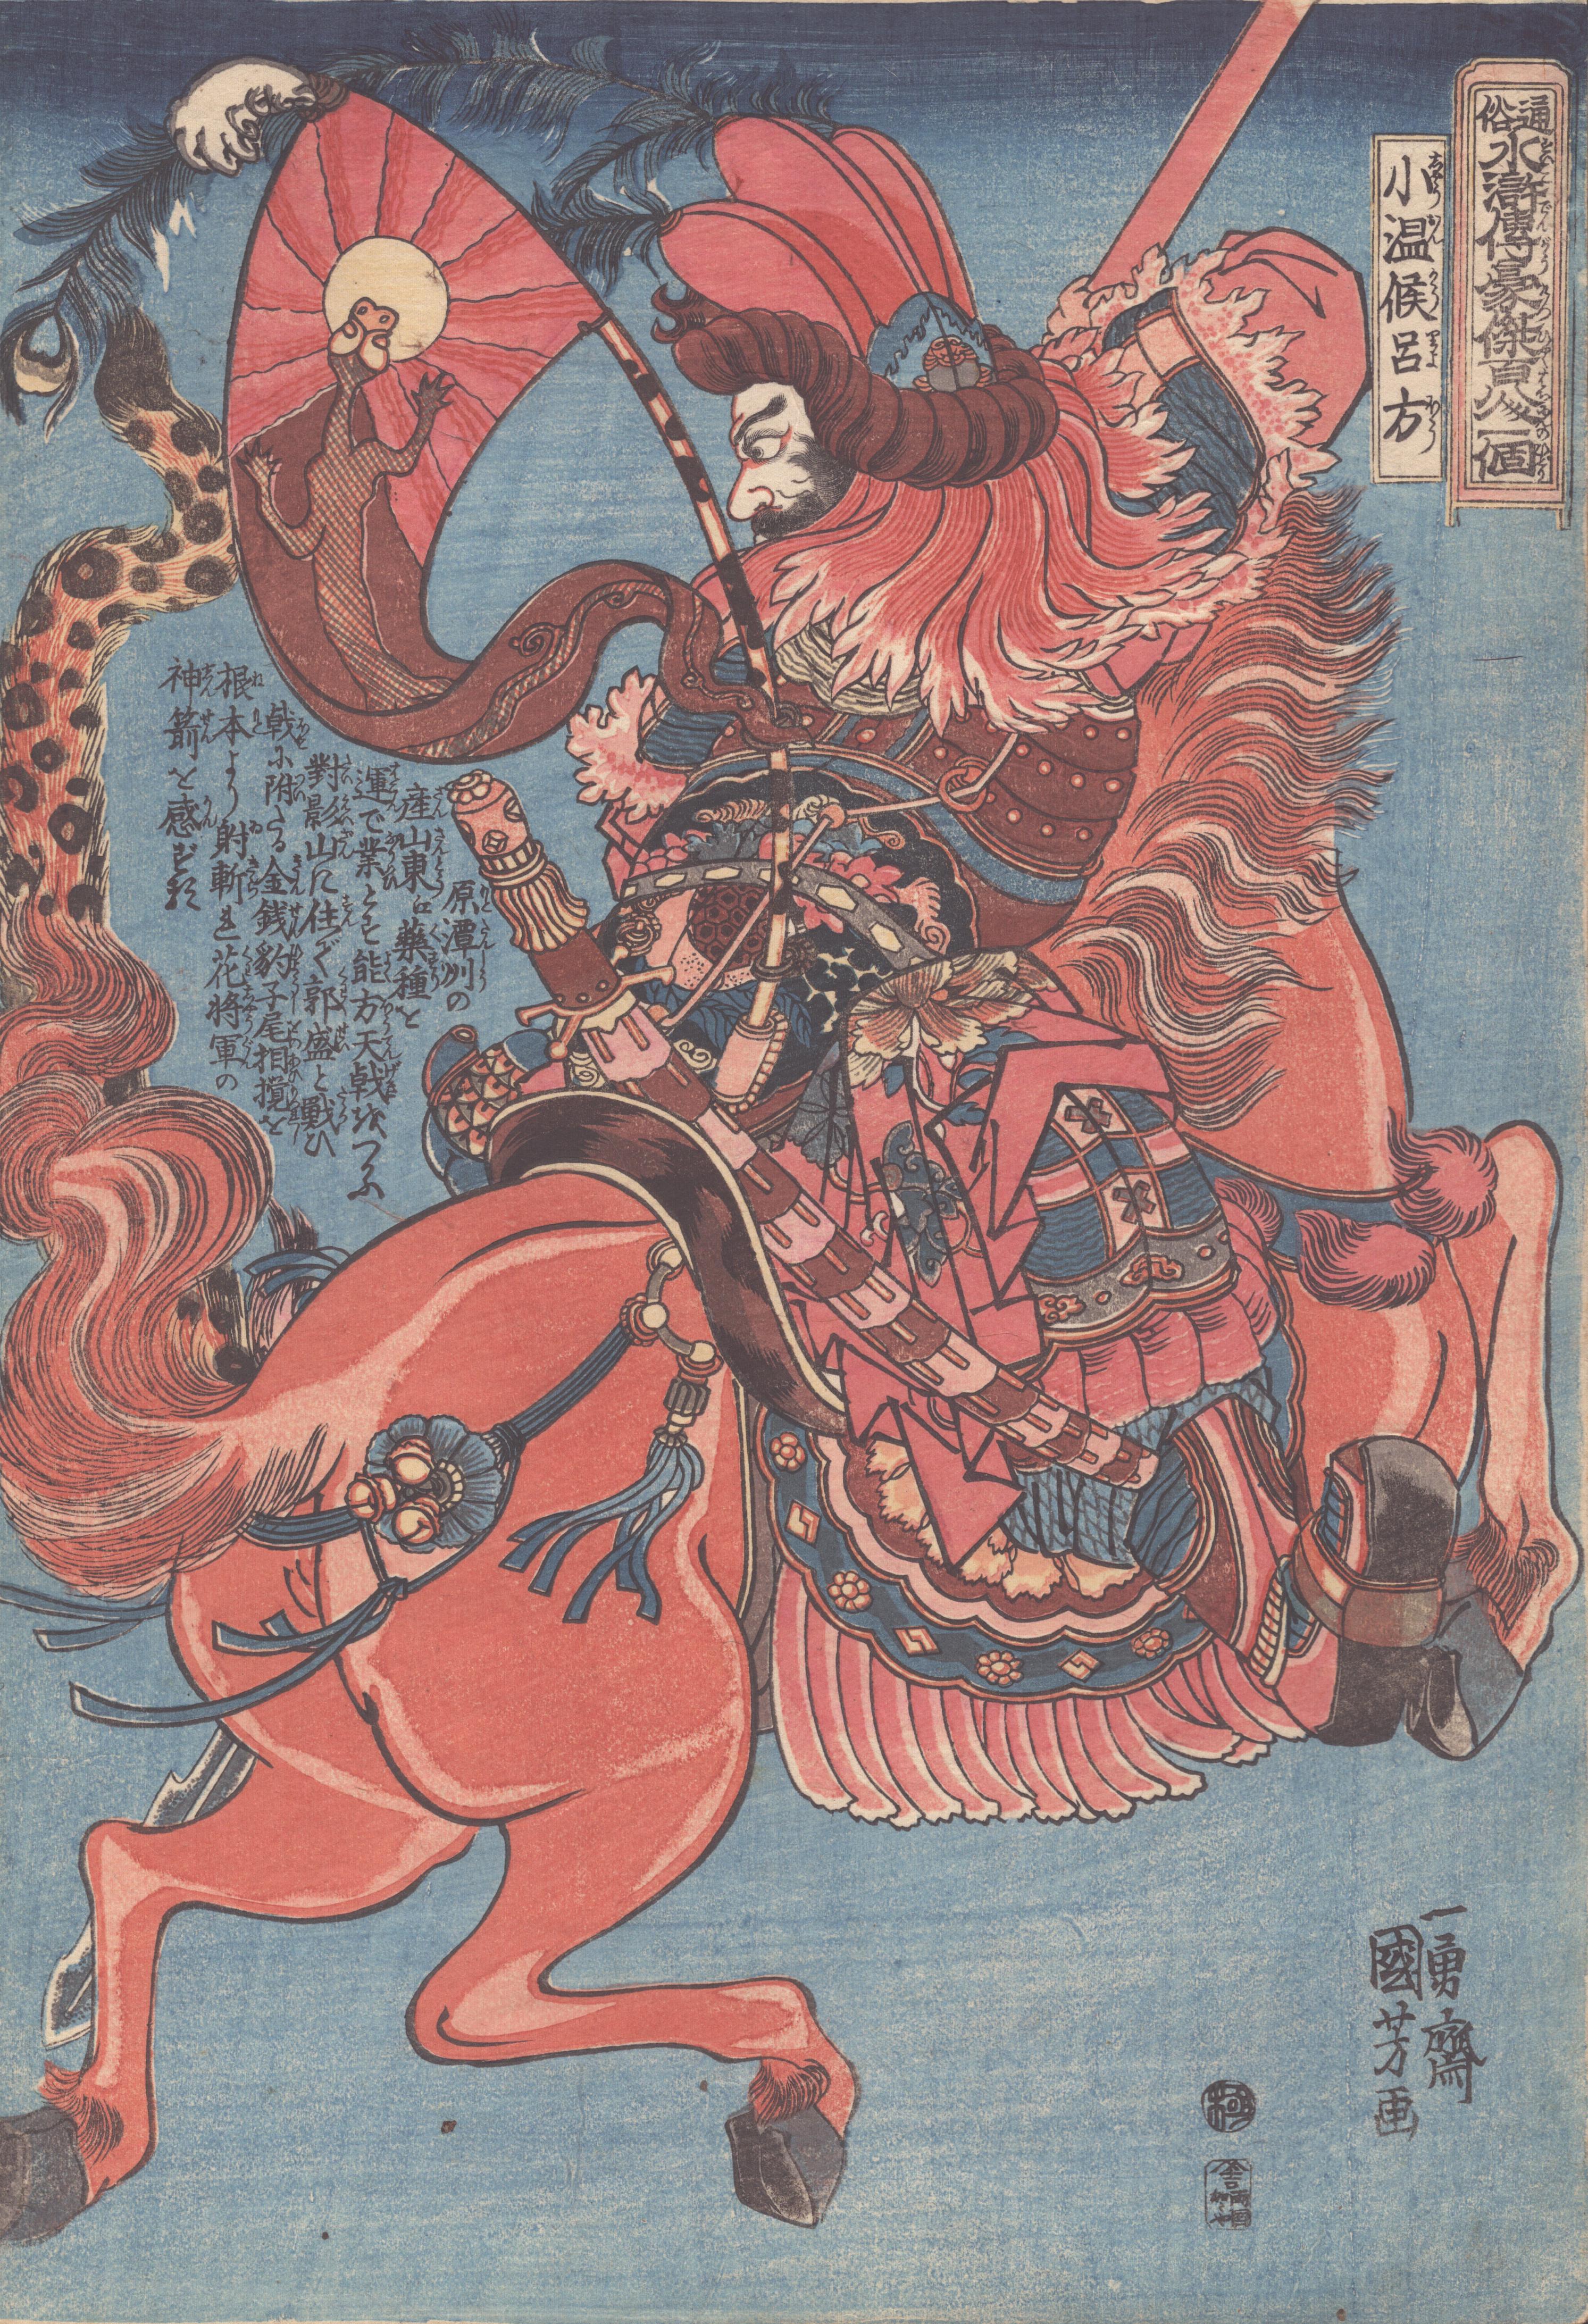 What was Utagawa Kuniyoshi known for?